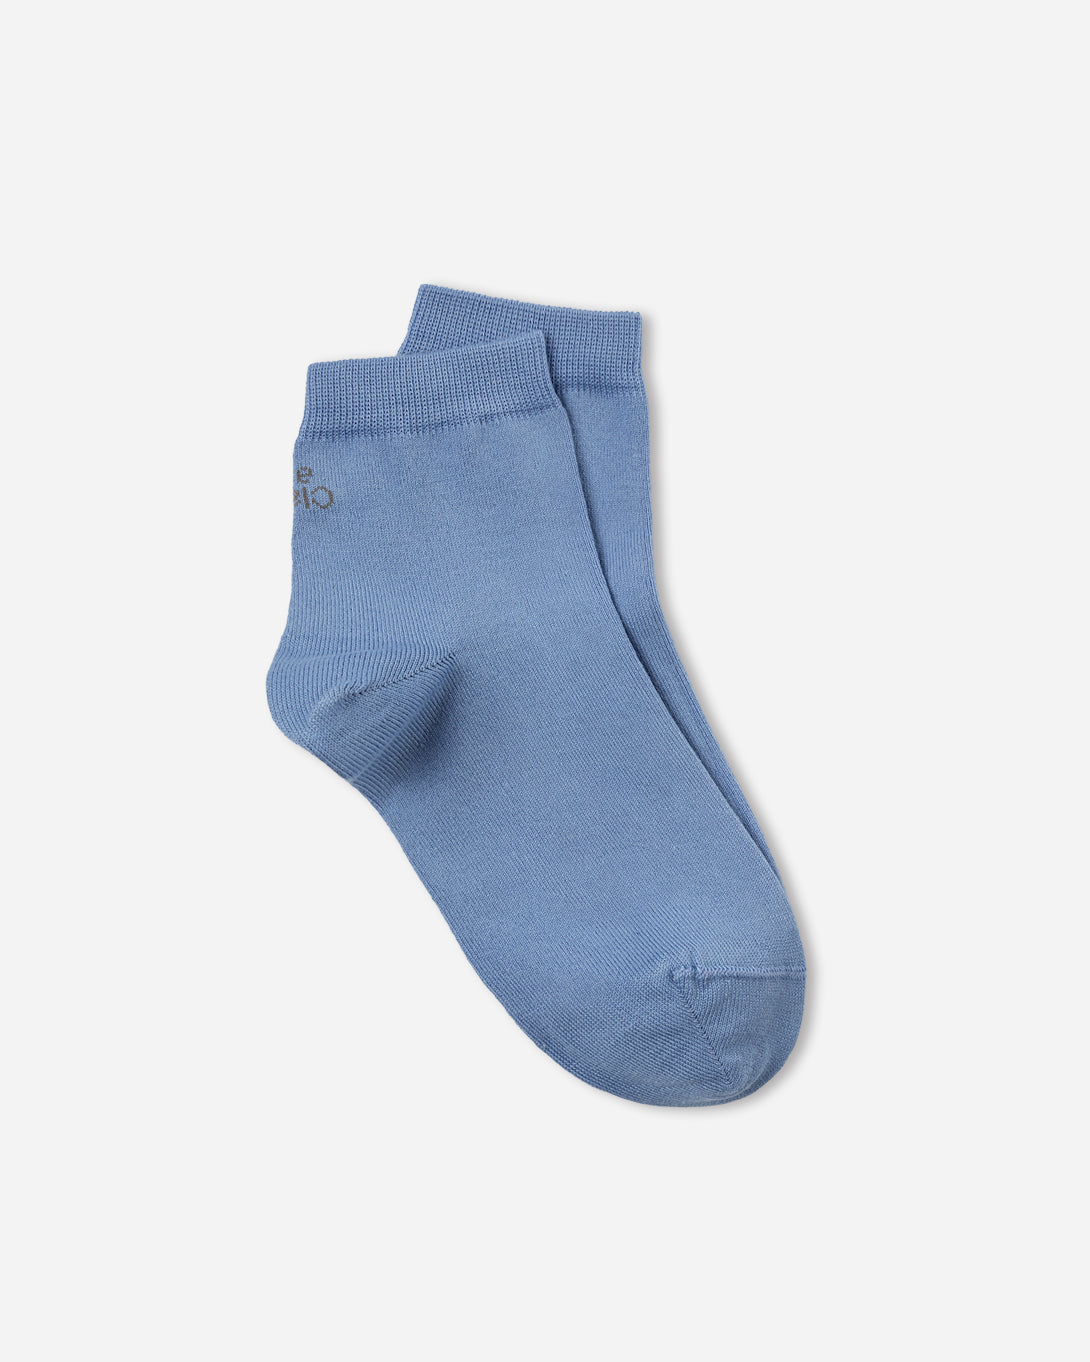 Blue Quarter Socks Womens Everyday Wearable Low Sock